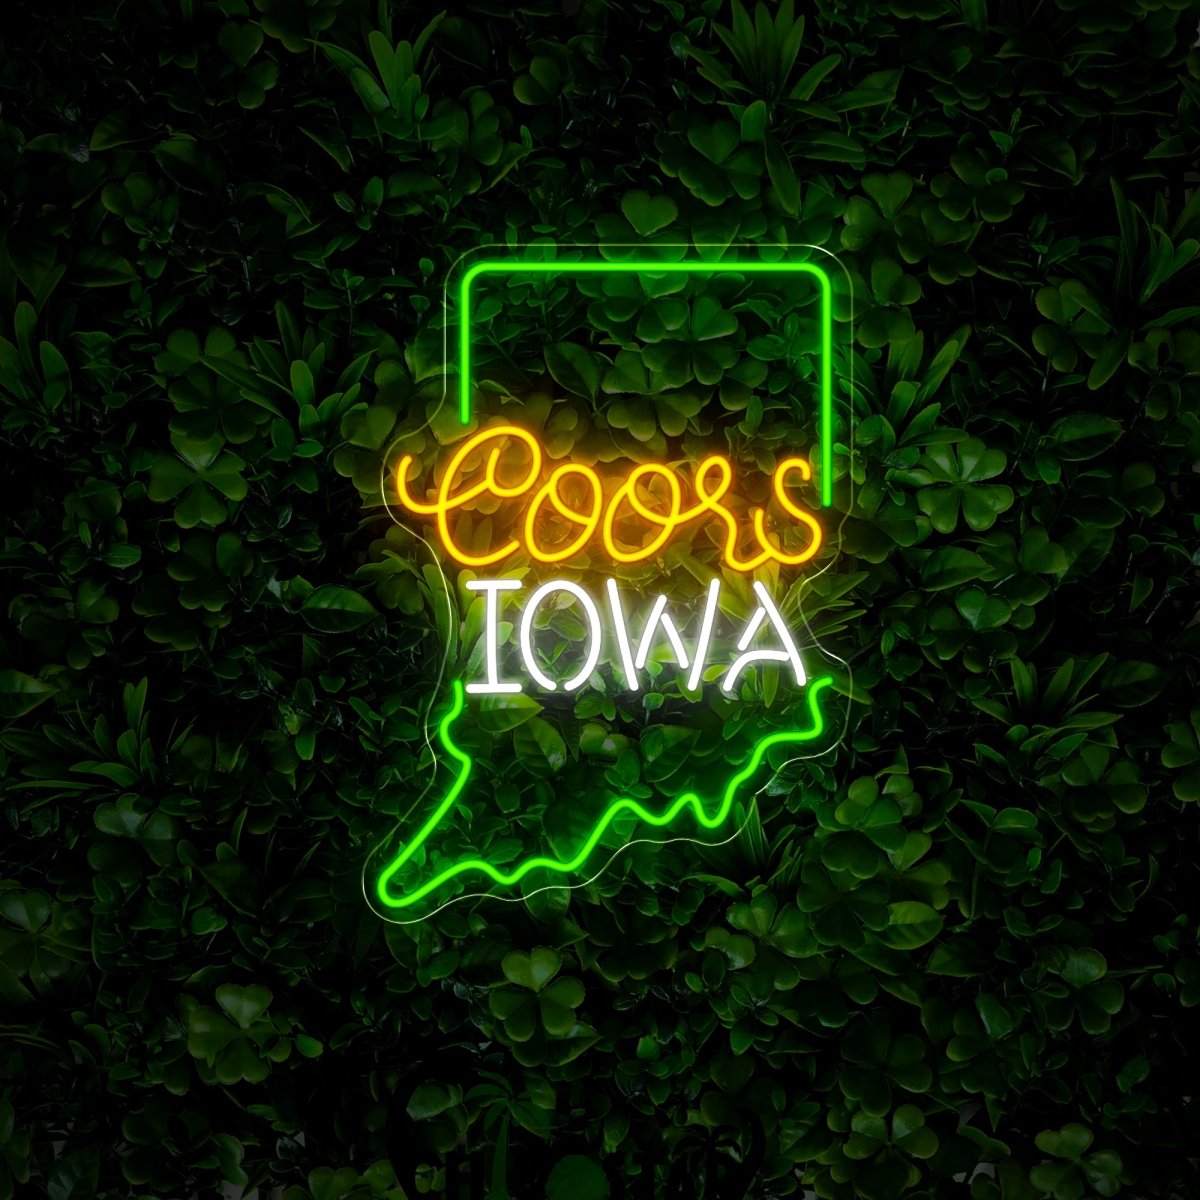 Coors American Iowa Maps Neon Sign - Reels Custom